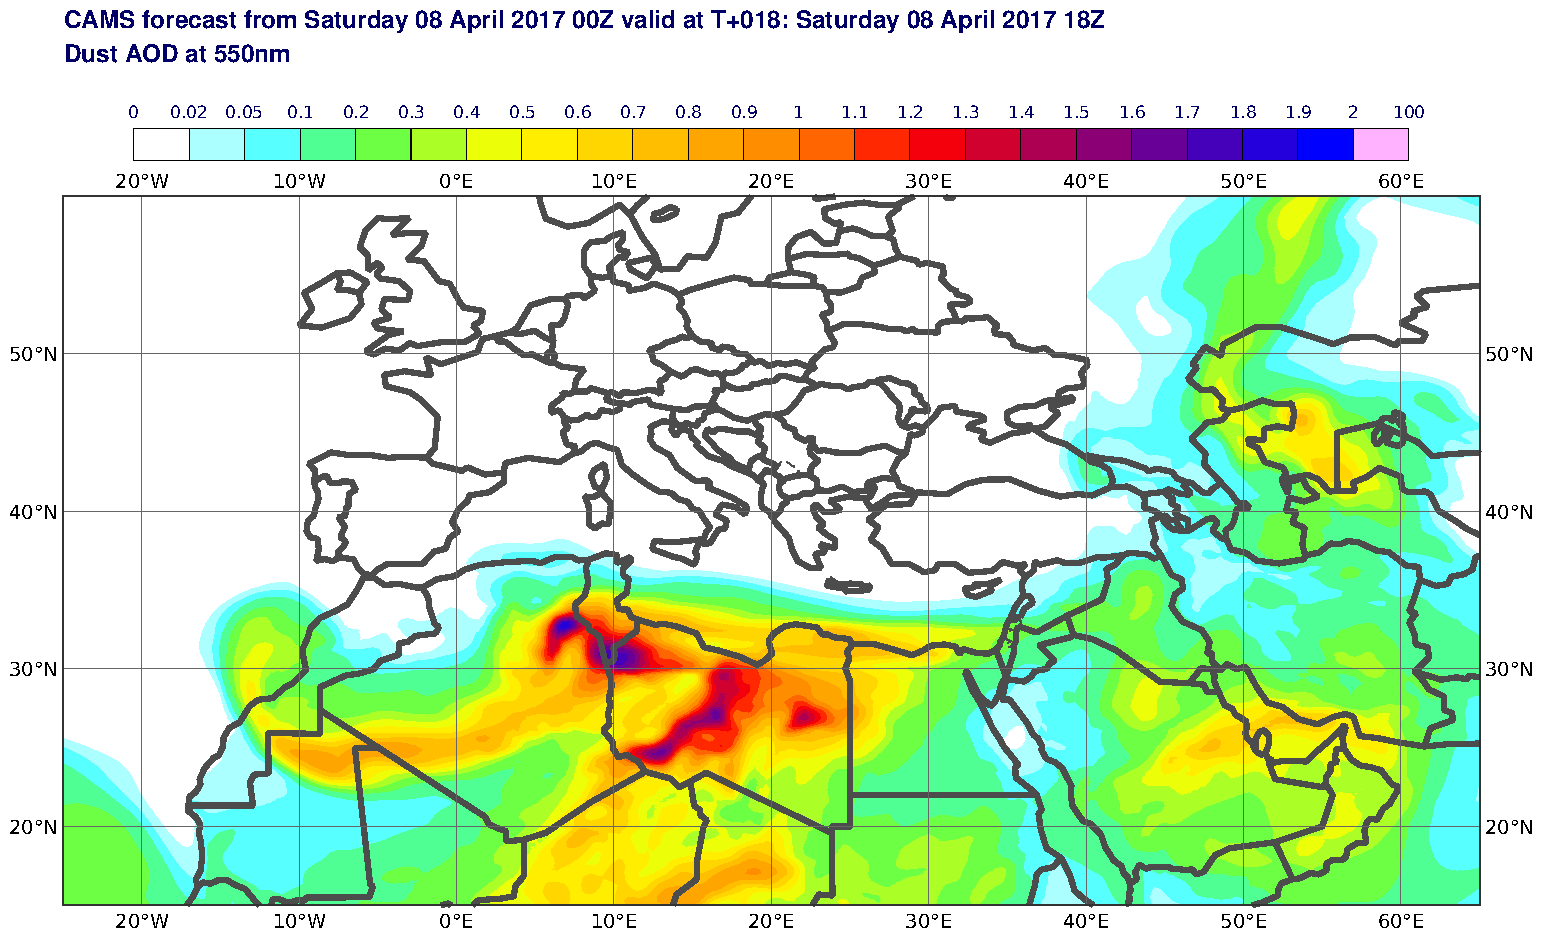 Dust AOD at 550nm valid at T18 - 2017-04-08 18:00